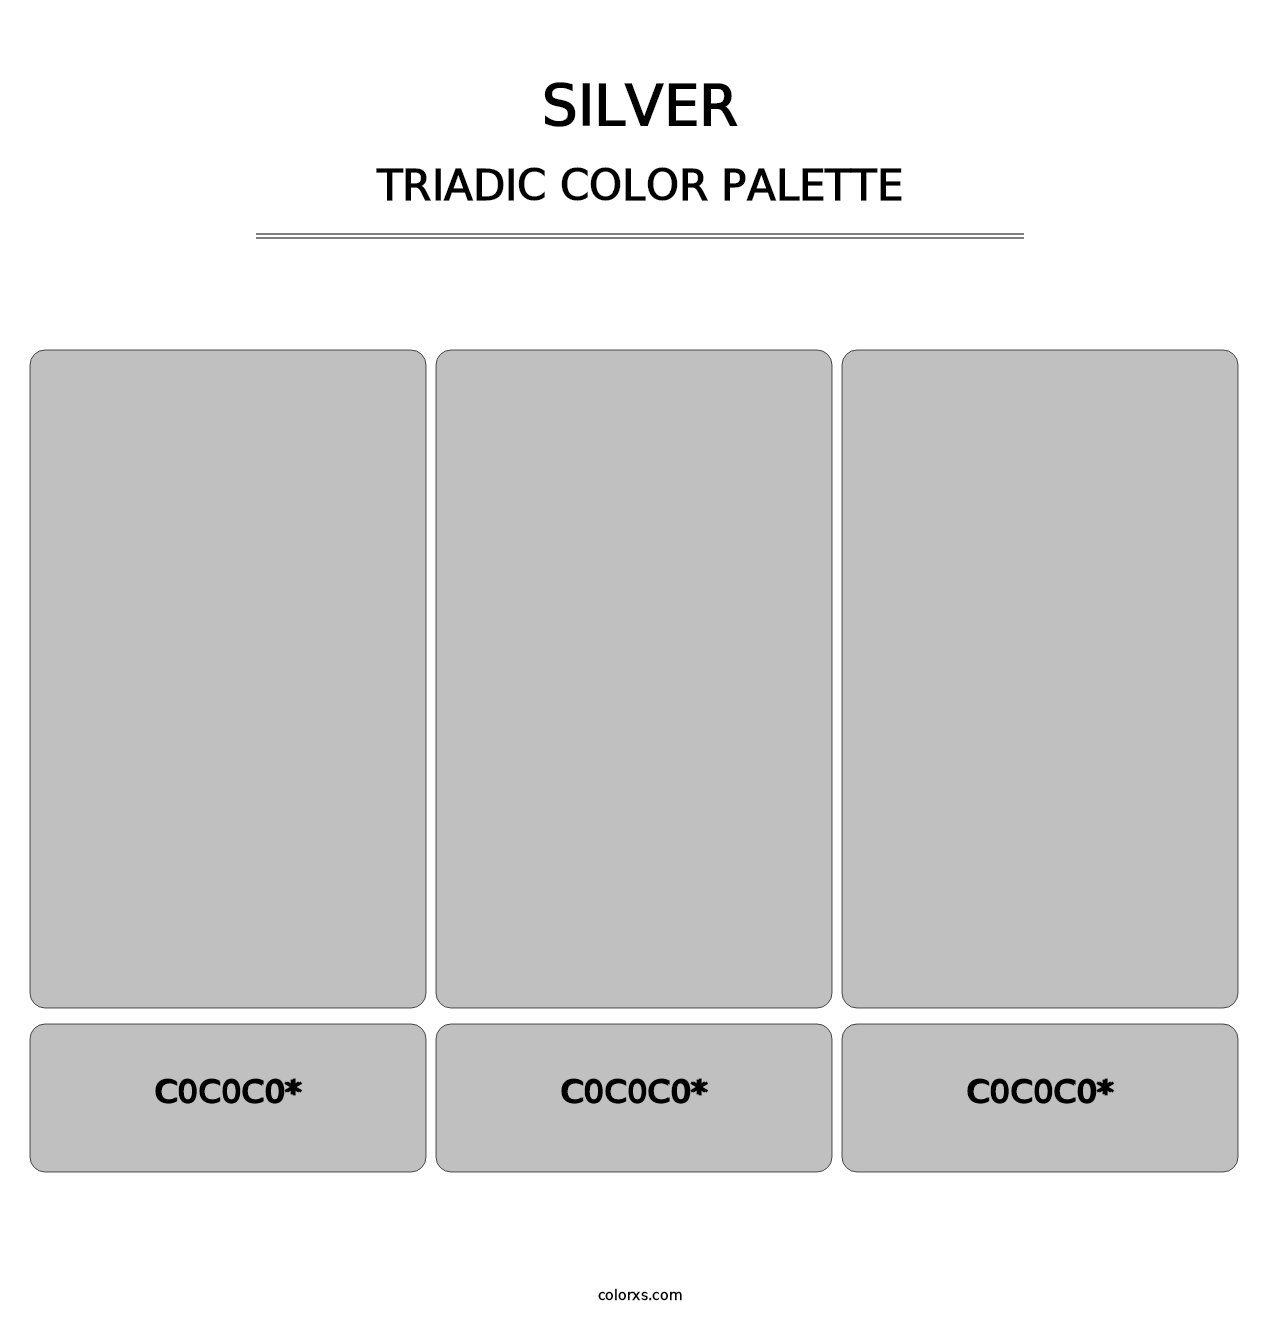 Silver - Triadic Color Palette